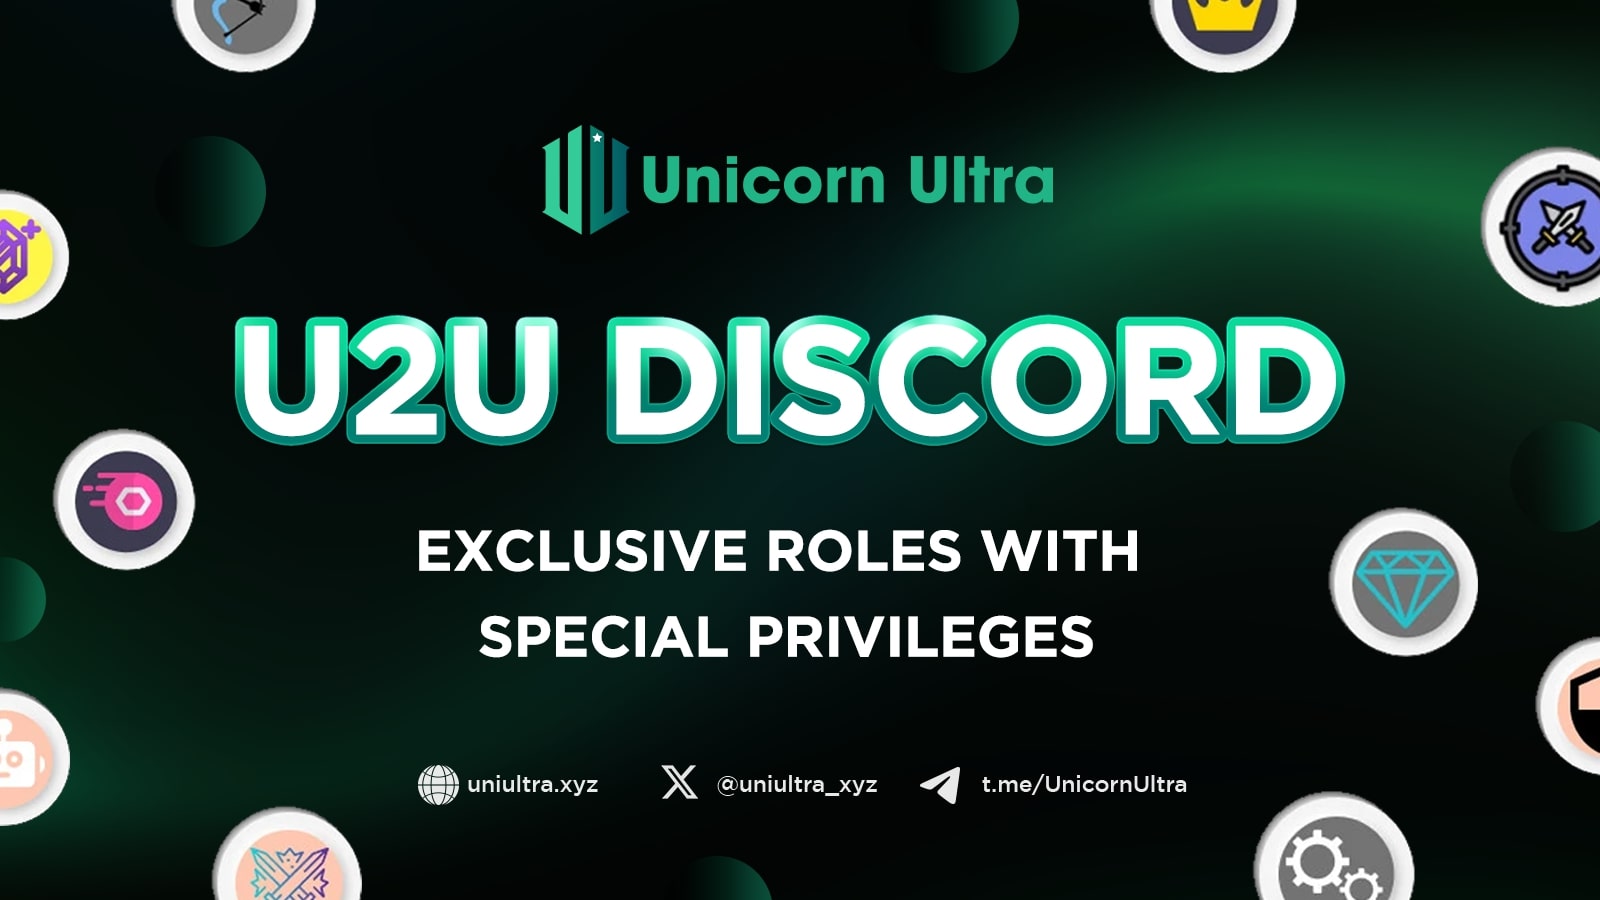 U2U's Discord